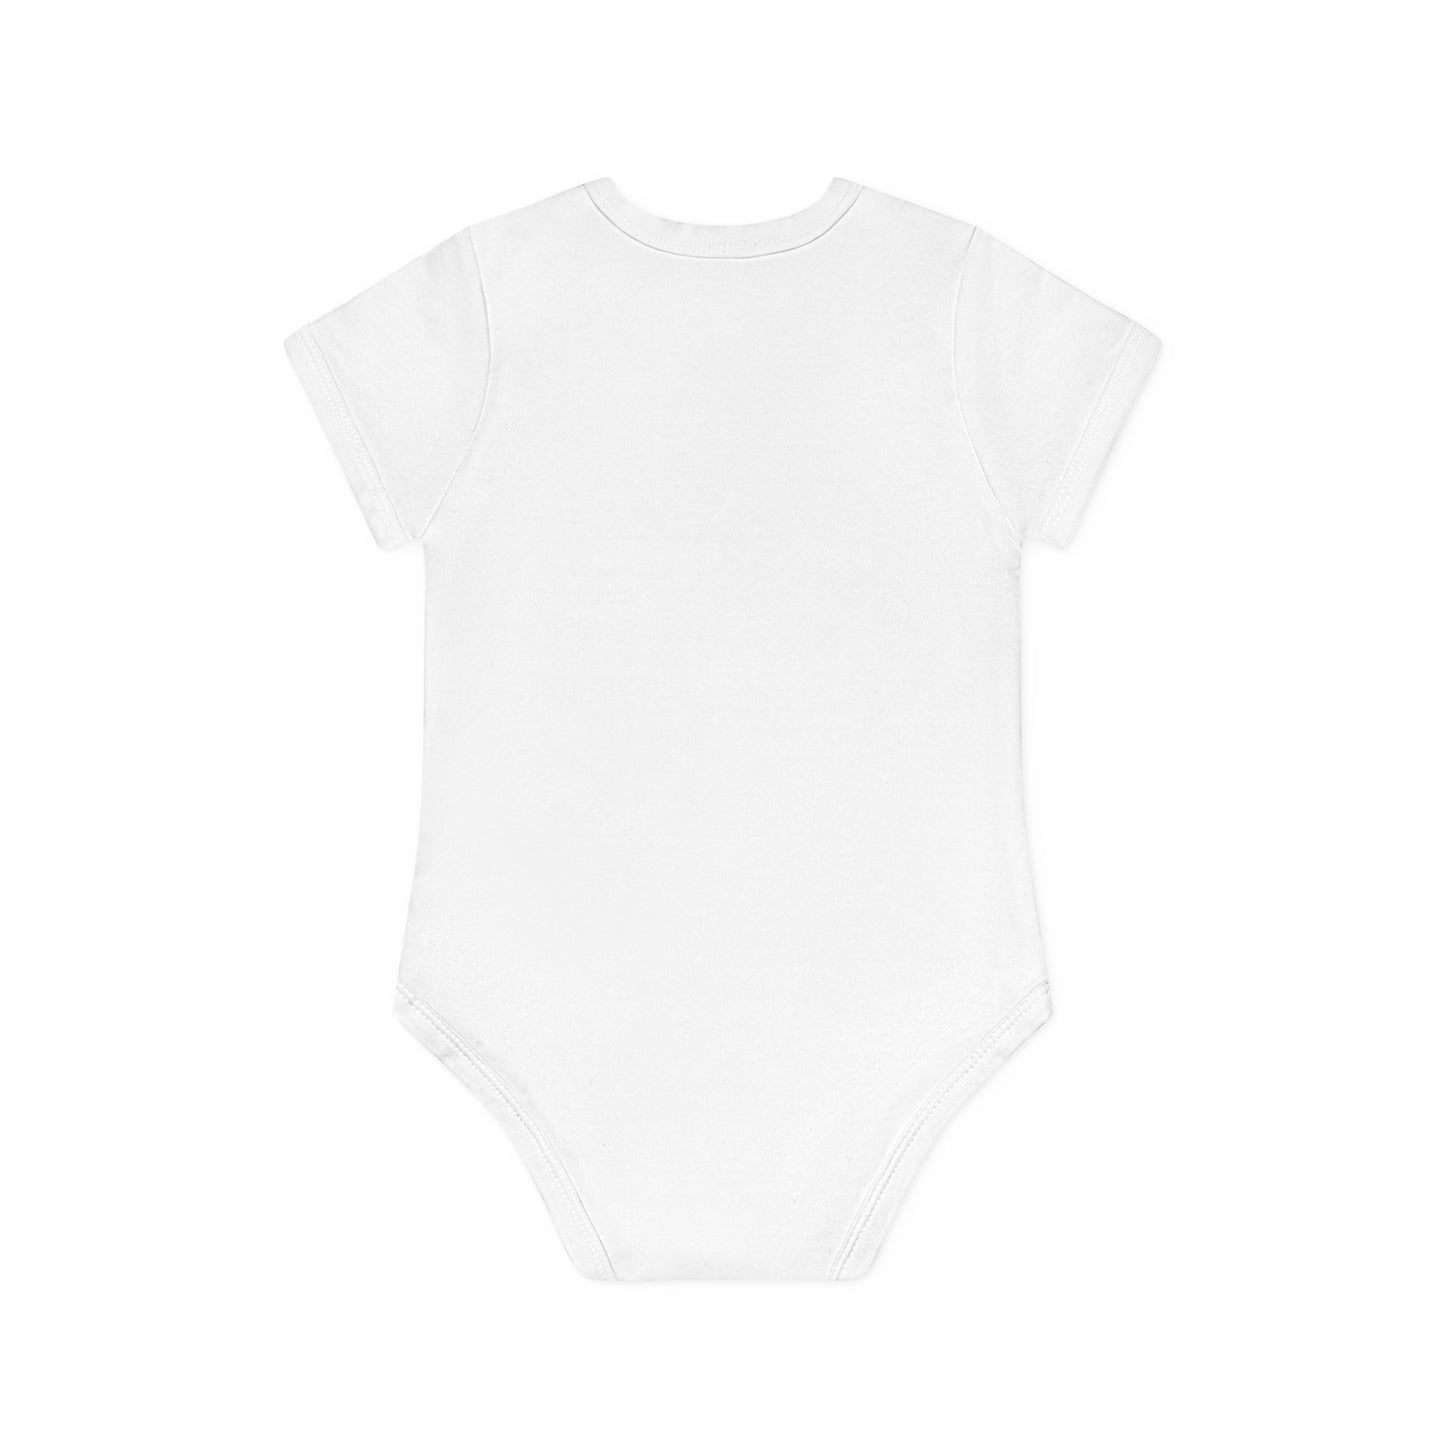 Baby Organic Short Sleeve Bodysuit, "Ghand o Nabat" Design/    سرهمی آستین کوتاه نوزاد پنبه ارگانیک طرح قند و نبات